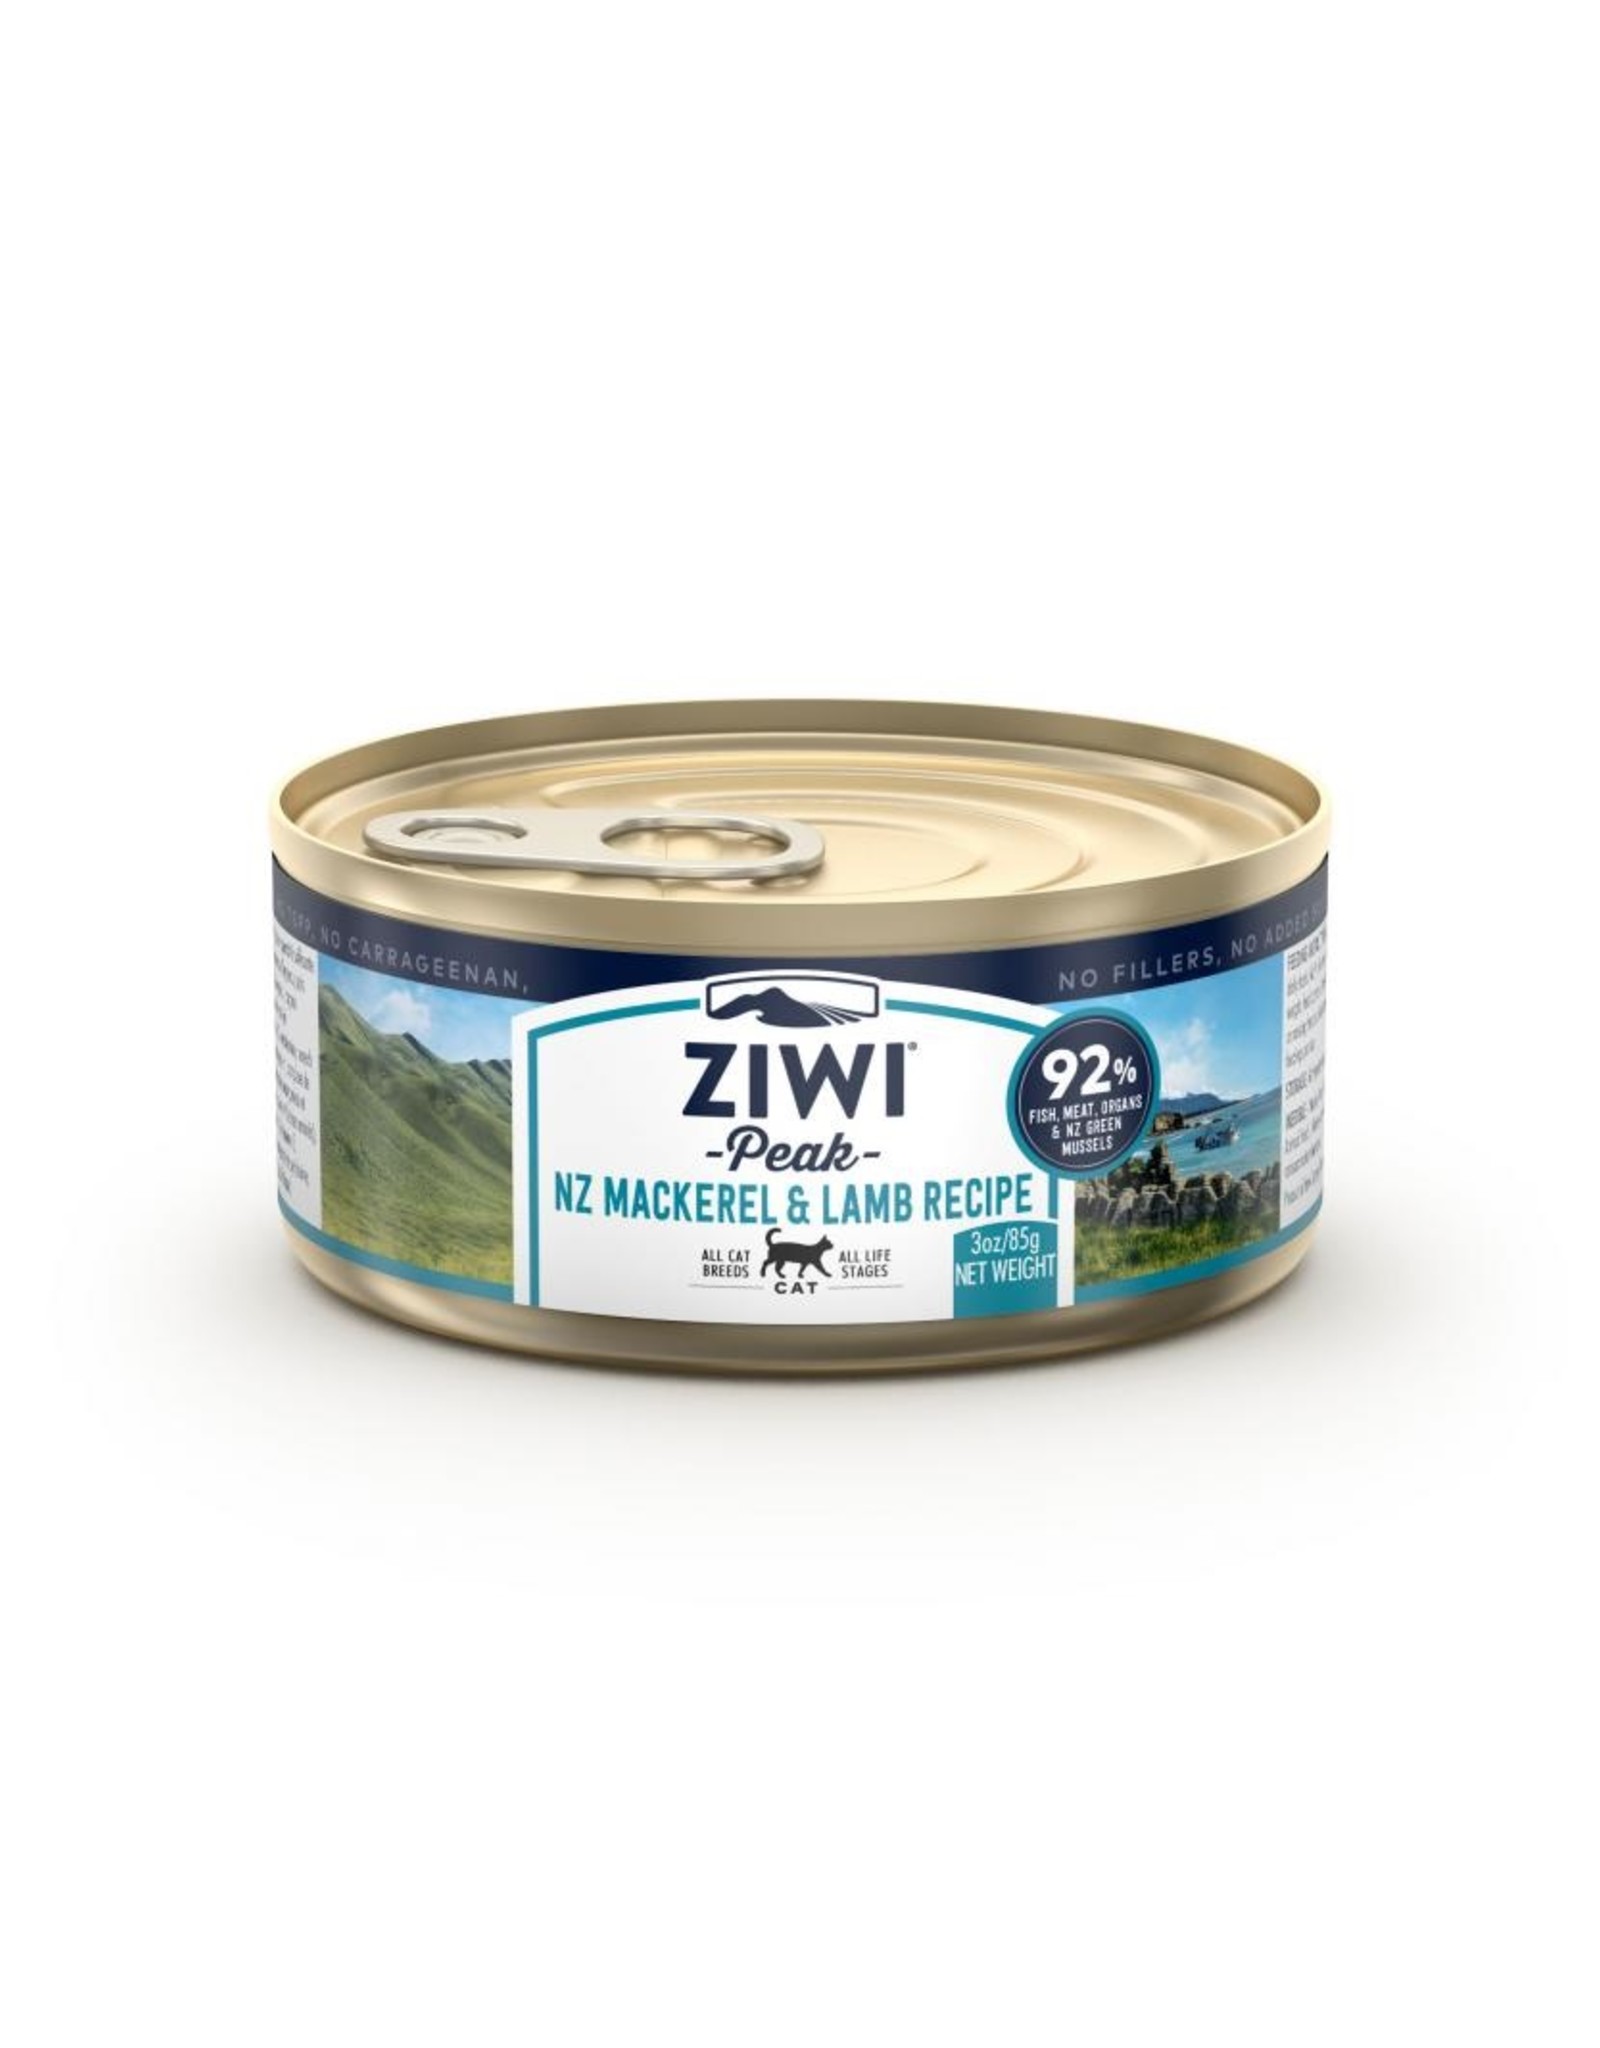 Ziwi Ziwi Peak Cat Mackerel and Lamb Recipe